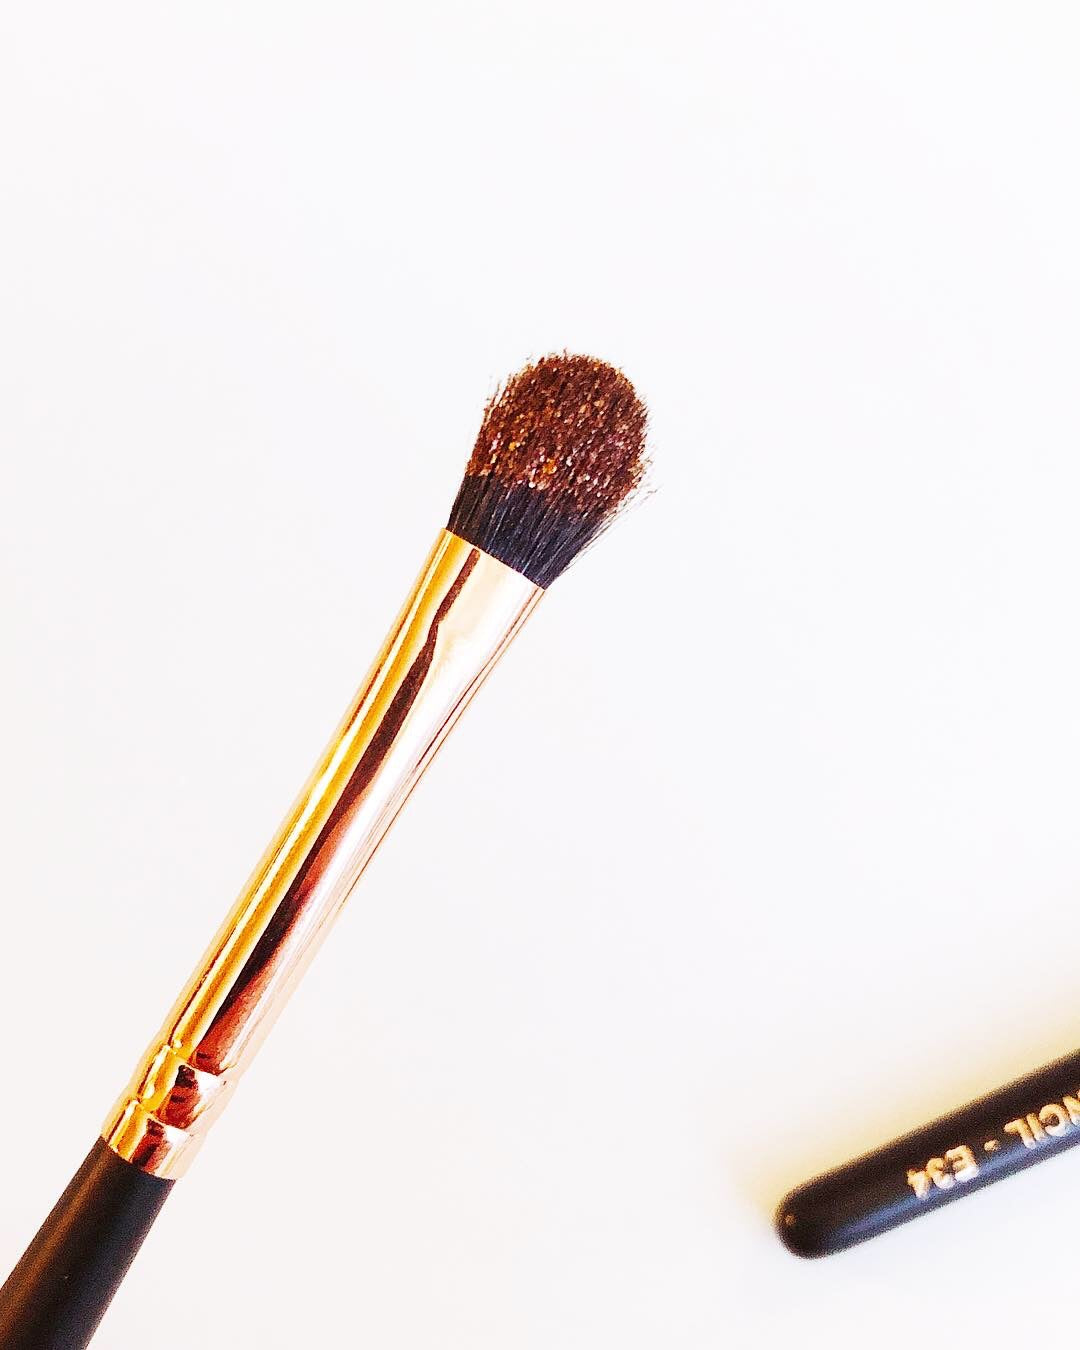 頂級灰鼠混羊毛眼部刷具5入組 / 眼影刷組 沾粉力強 Rose Gold Makeup Brushes Set/ pro eyeshadow brush 